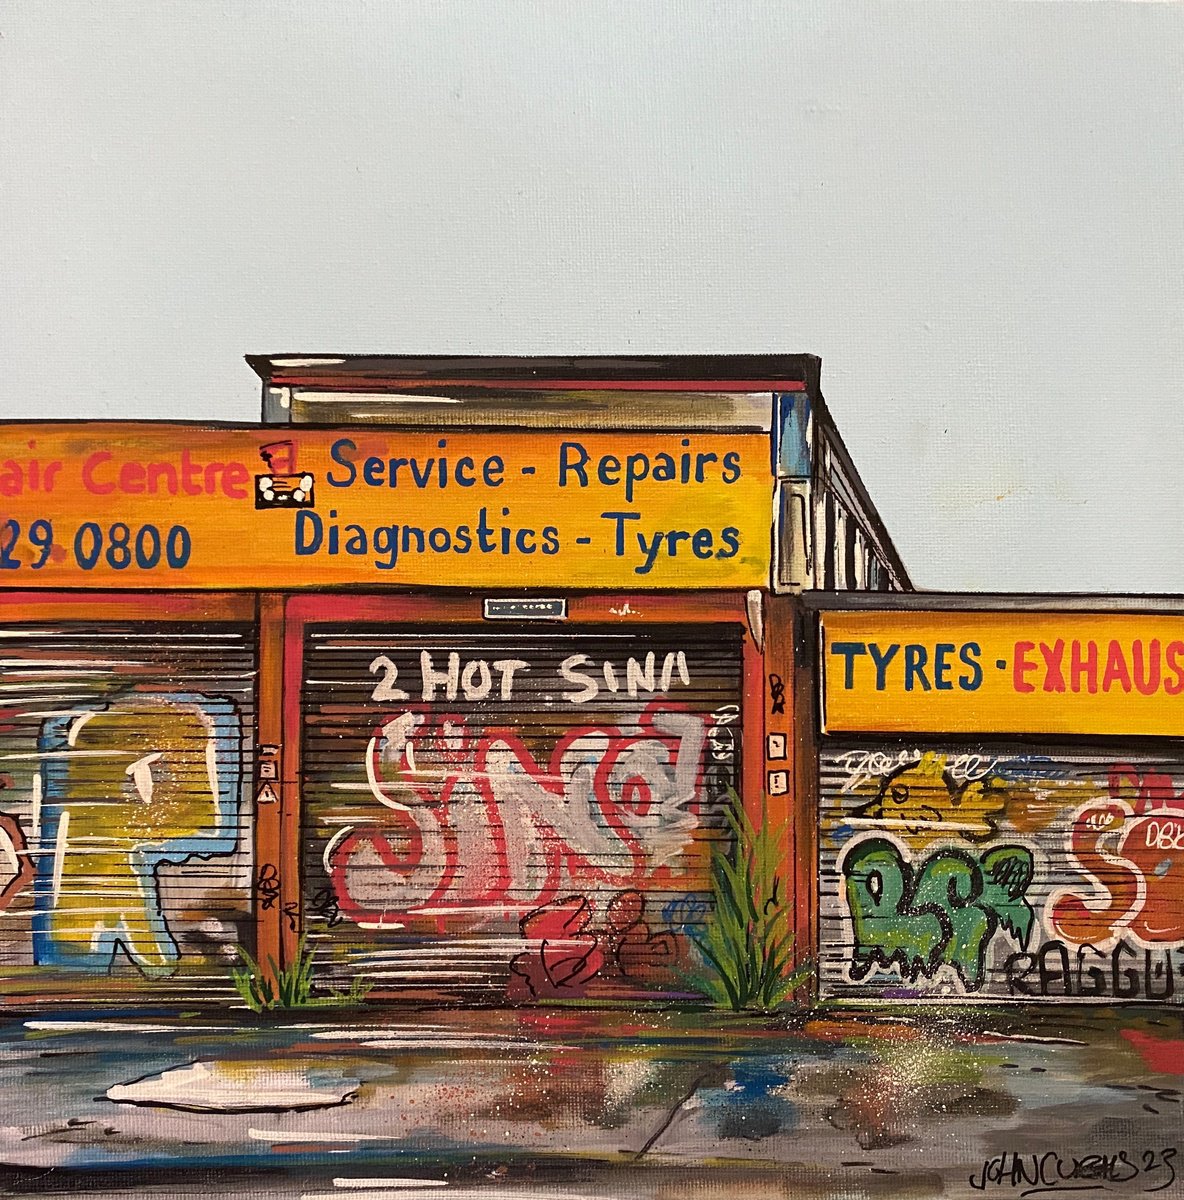 Garage - Original on canvas board by John Curtis